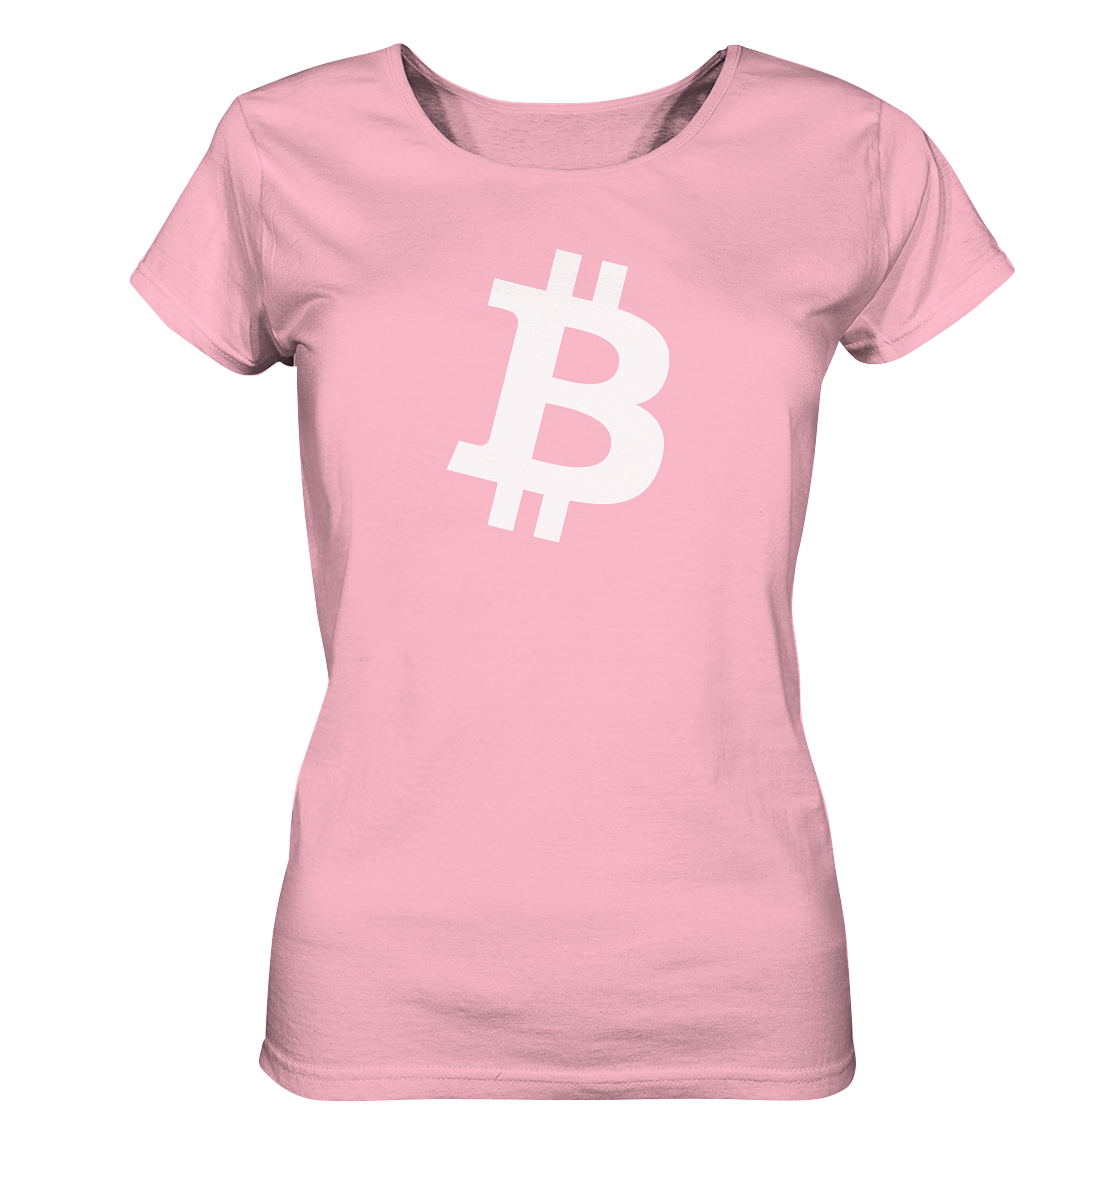 Bitcoin "simple B white" - Ladies Organic Shirt